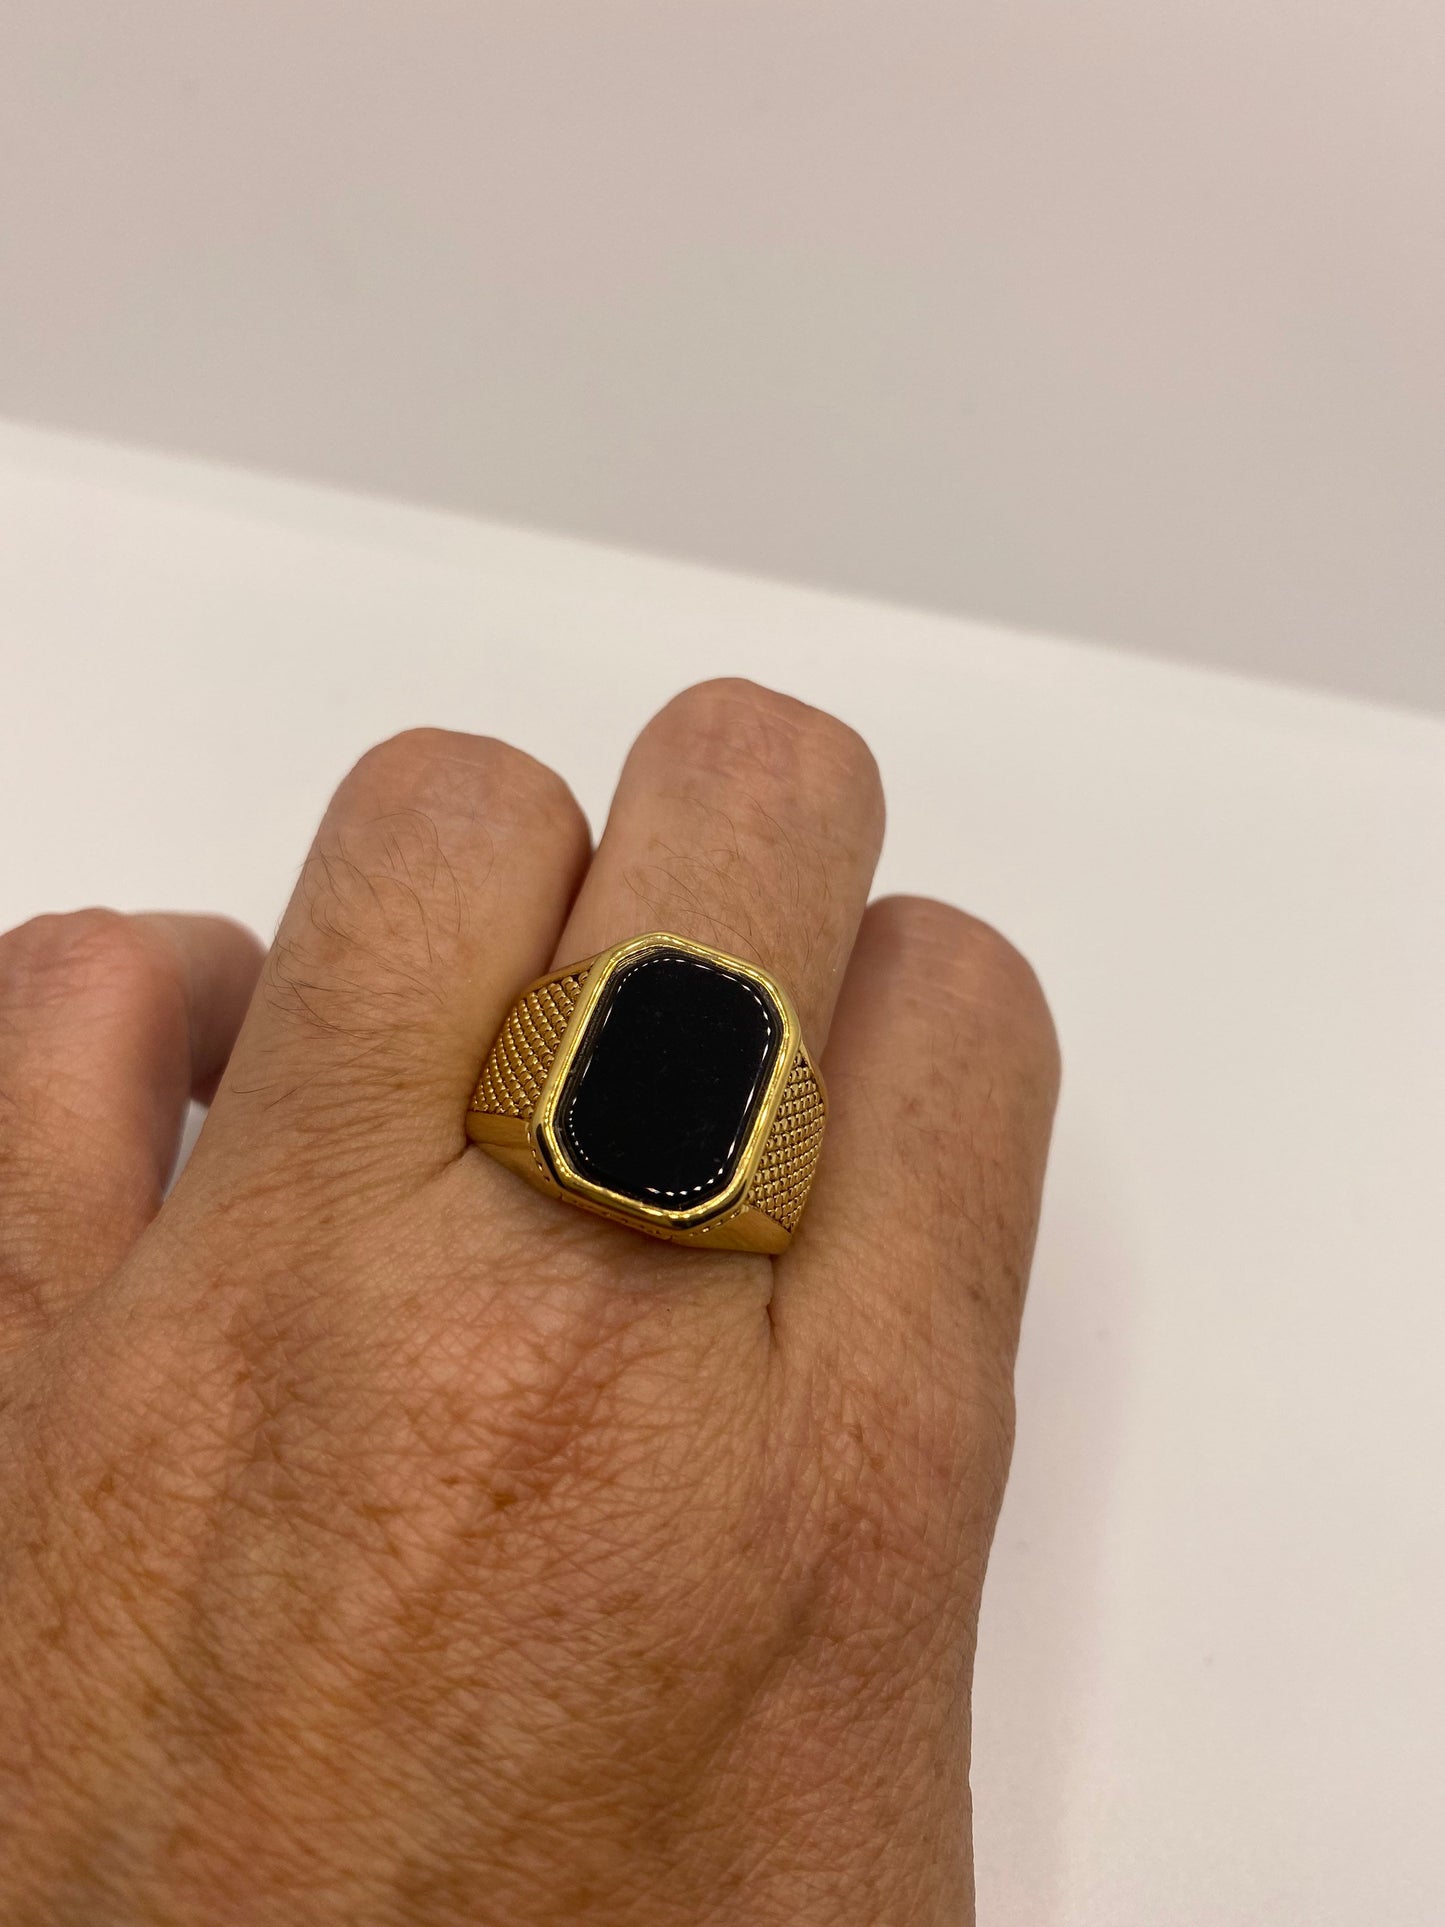 Vintage Golden Stainless Steel Black Onyx Genuine Ring